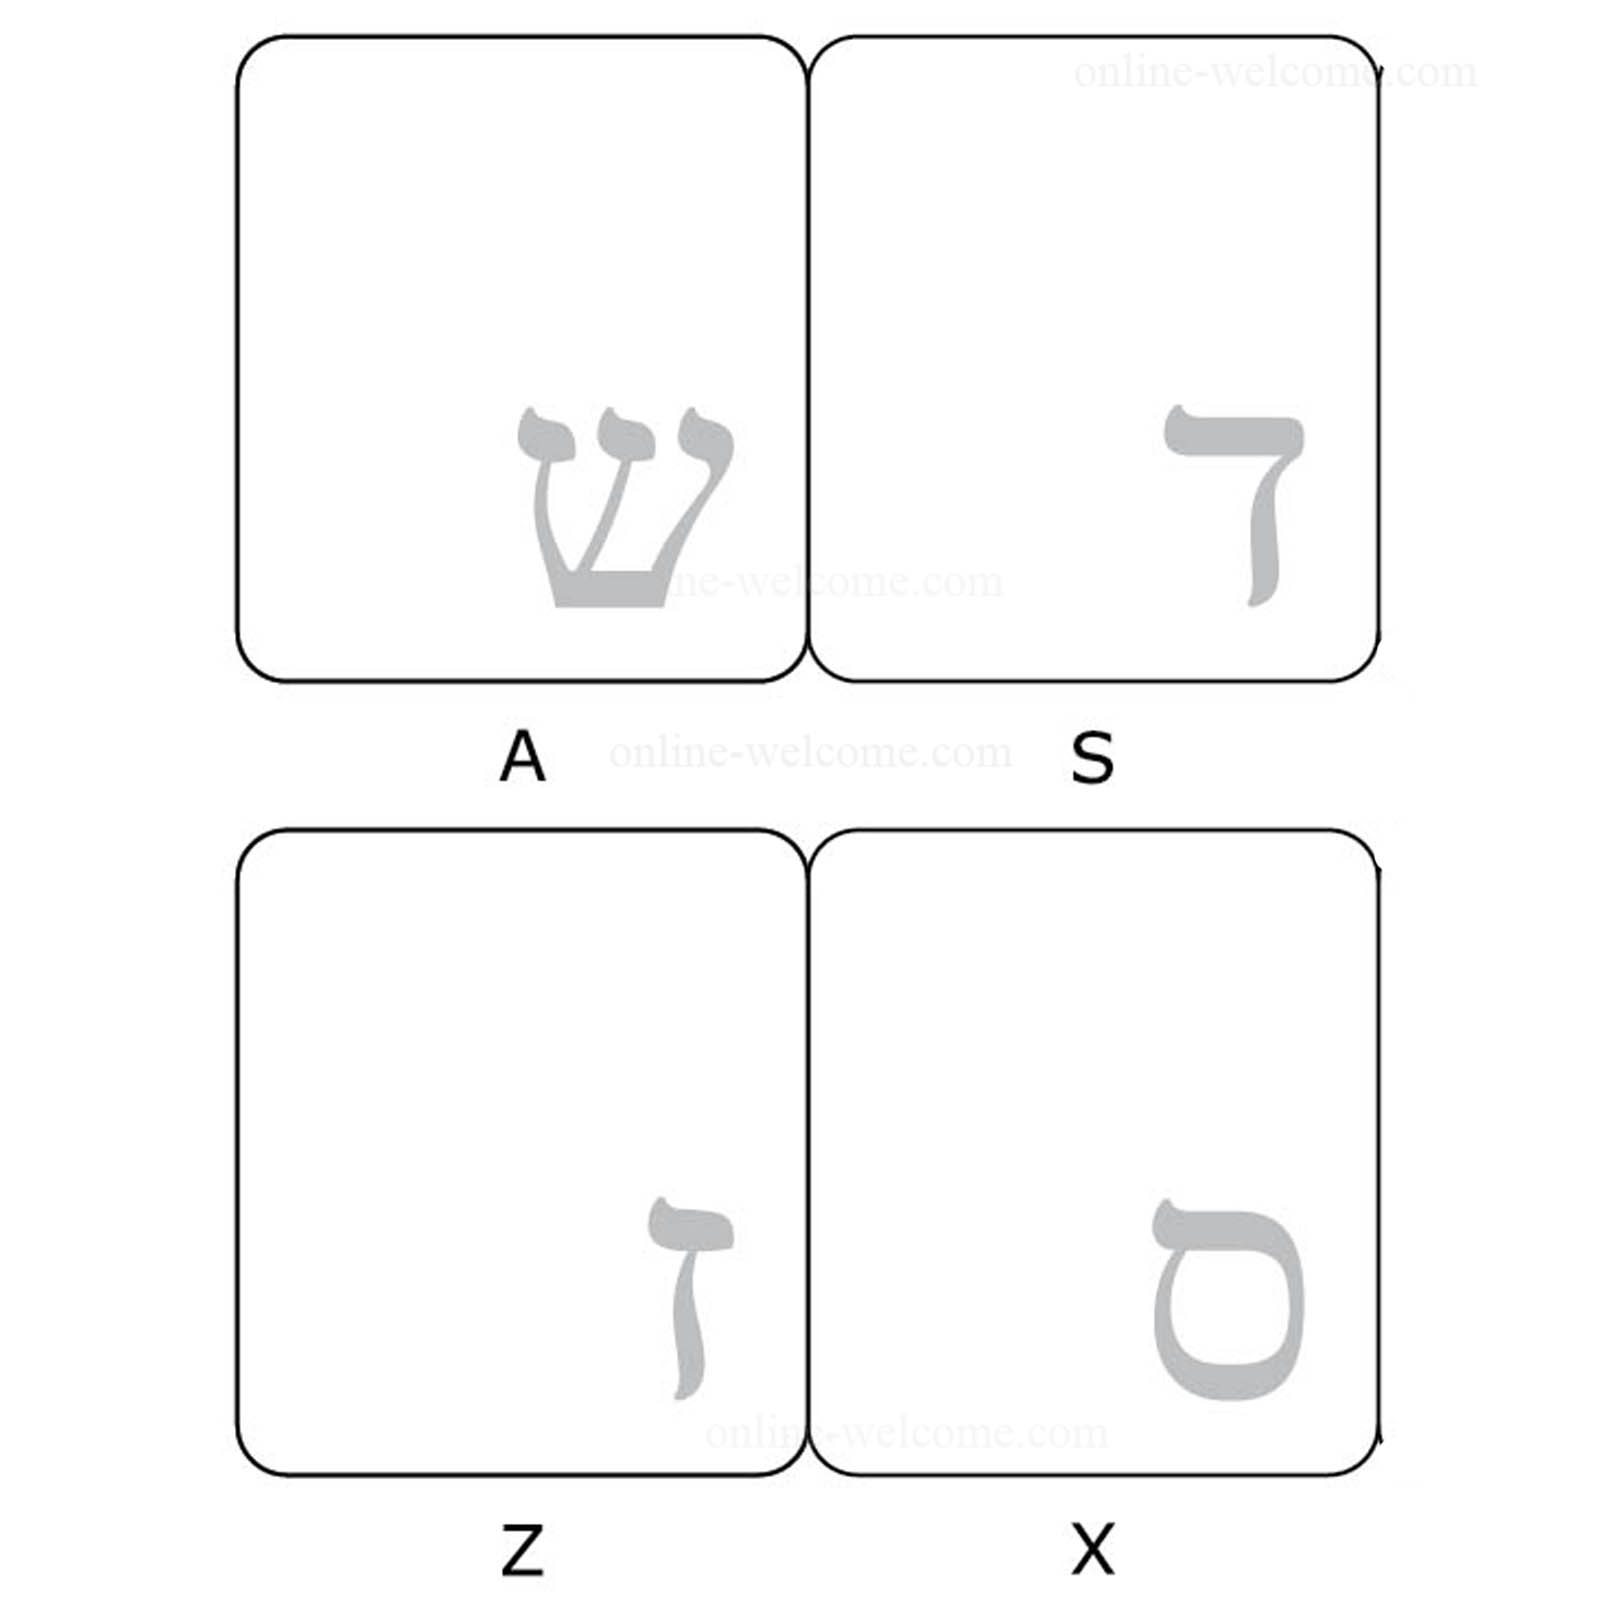 Hebrew transparent keyboard sticker white letters